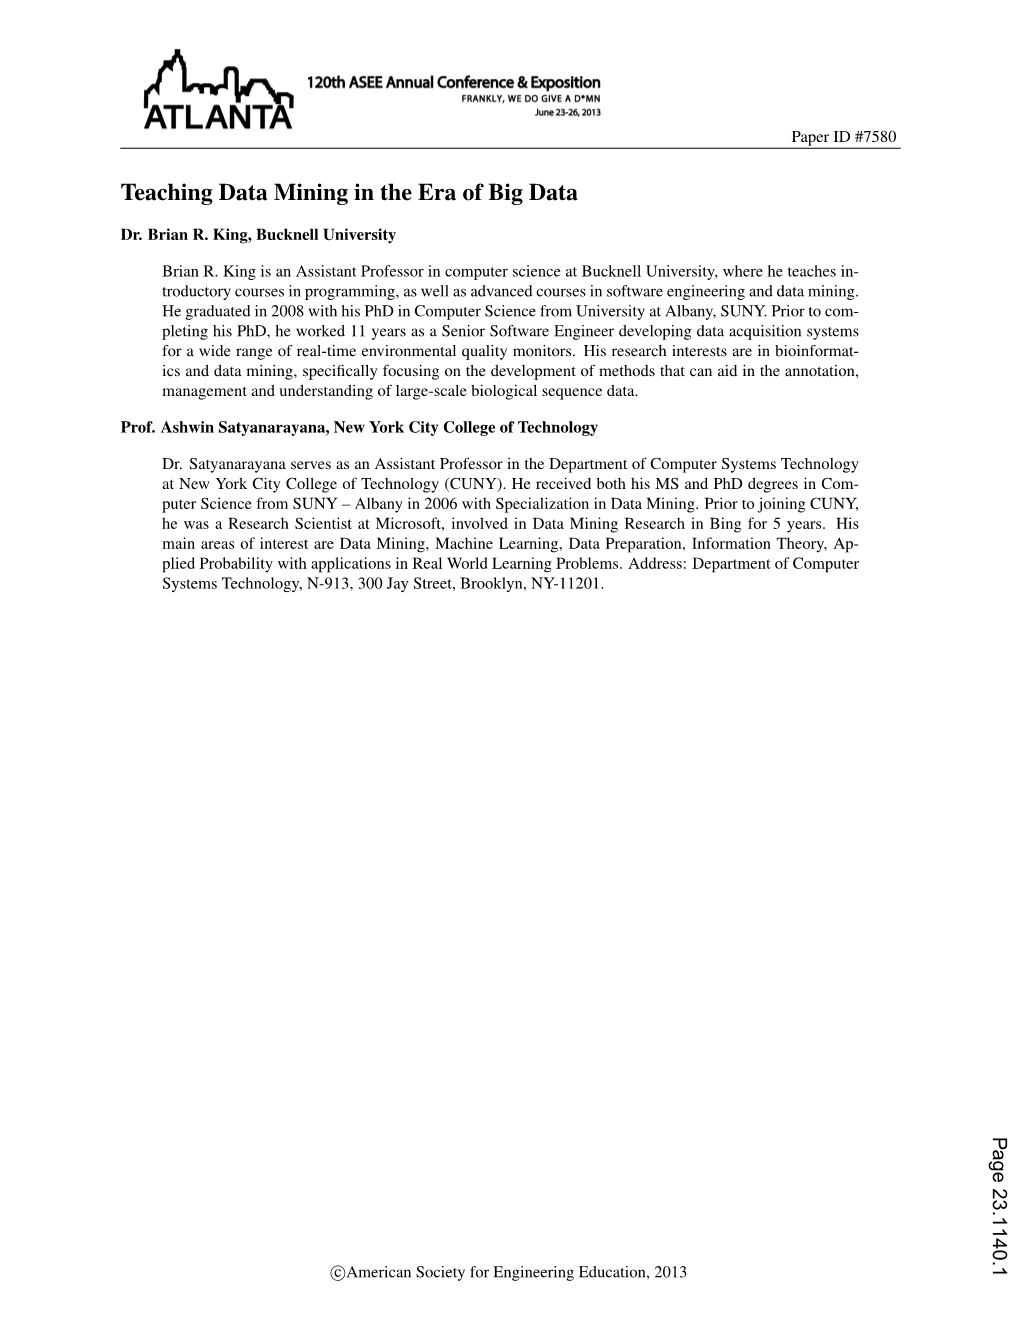 Teaching Data Mining in the Era of Big Data